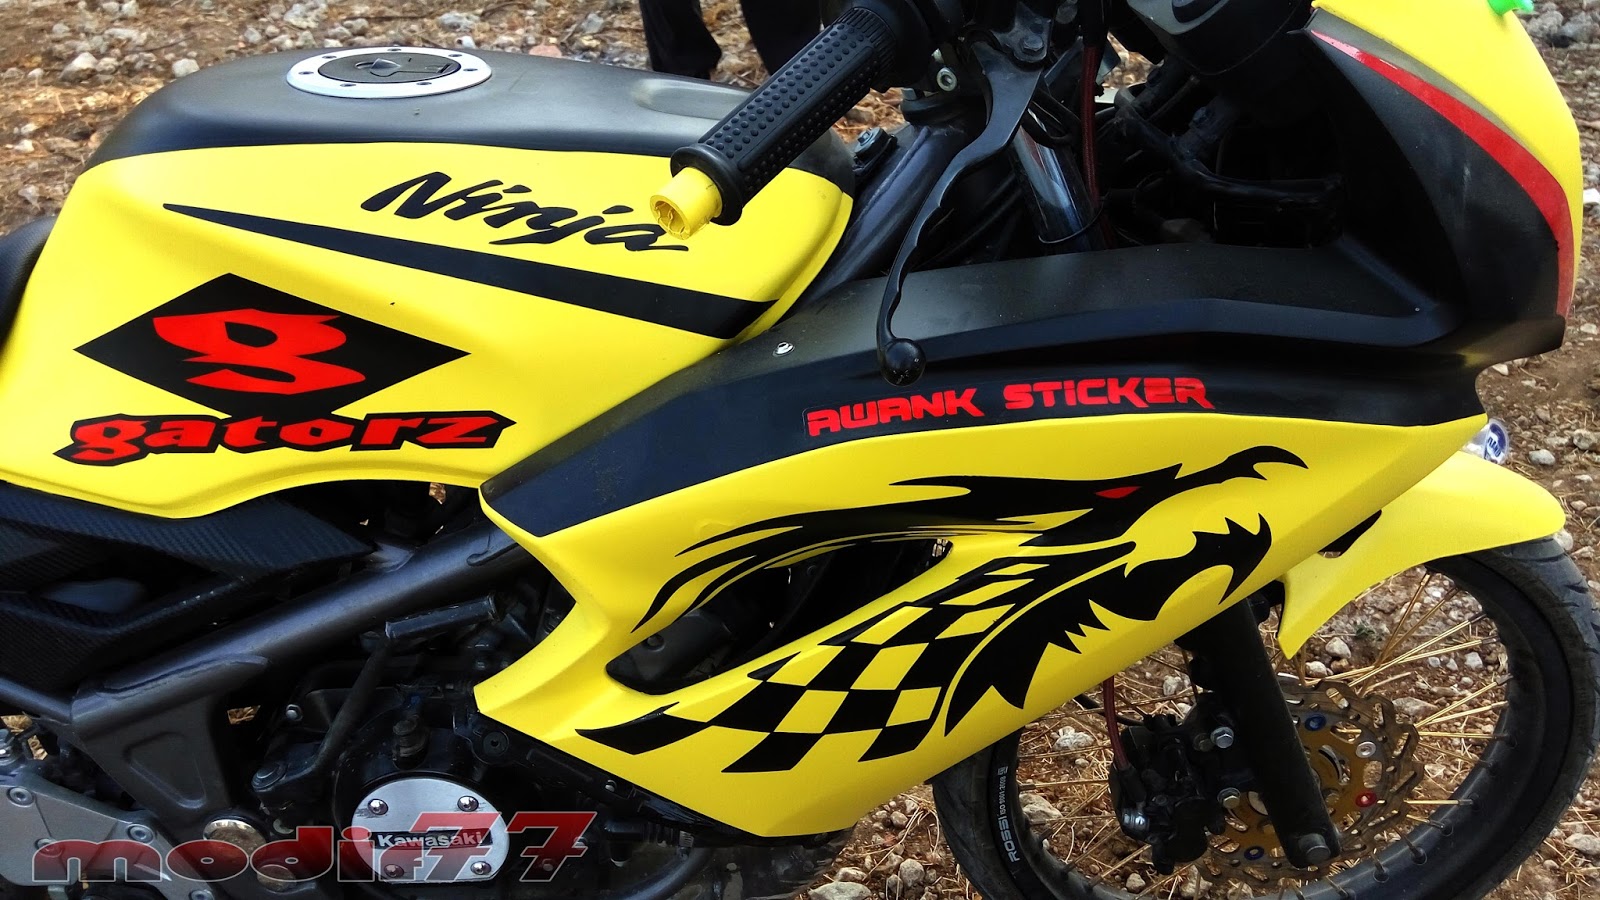 Modifikasi Motor Ninja Rr Warna Hitam Kuning - Arena Modifikasi